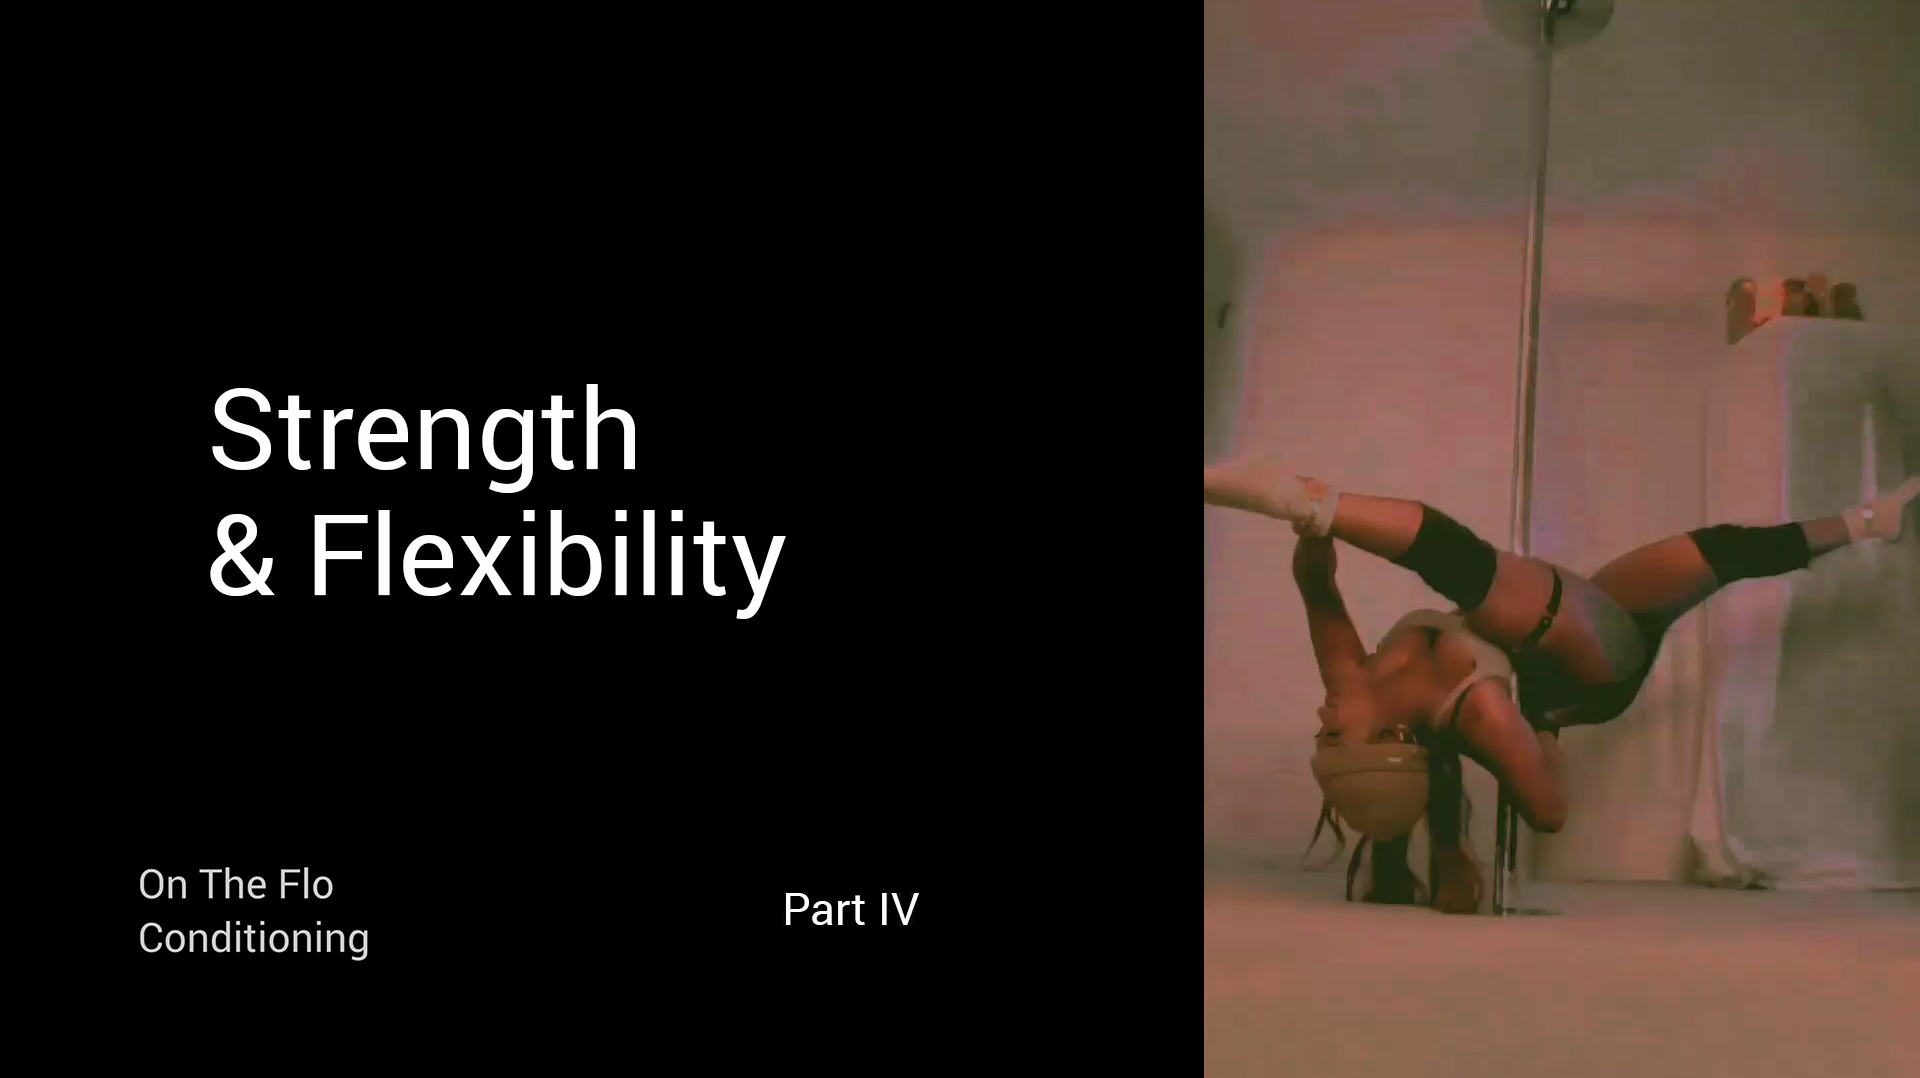 How Do You Build Arm Strength/Upper Body Strength For Pole Dancing